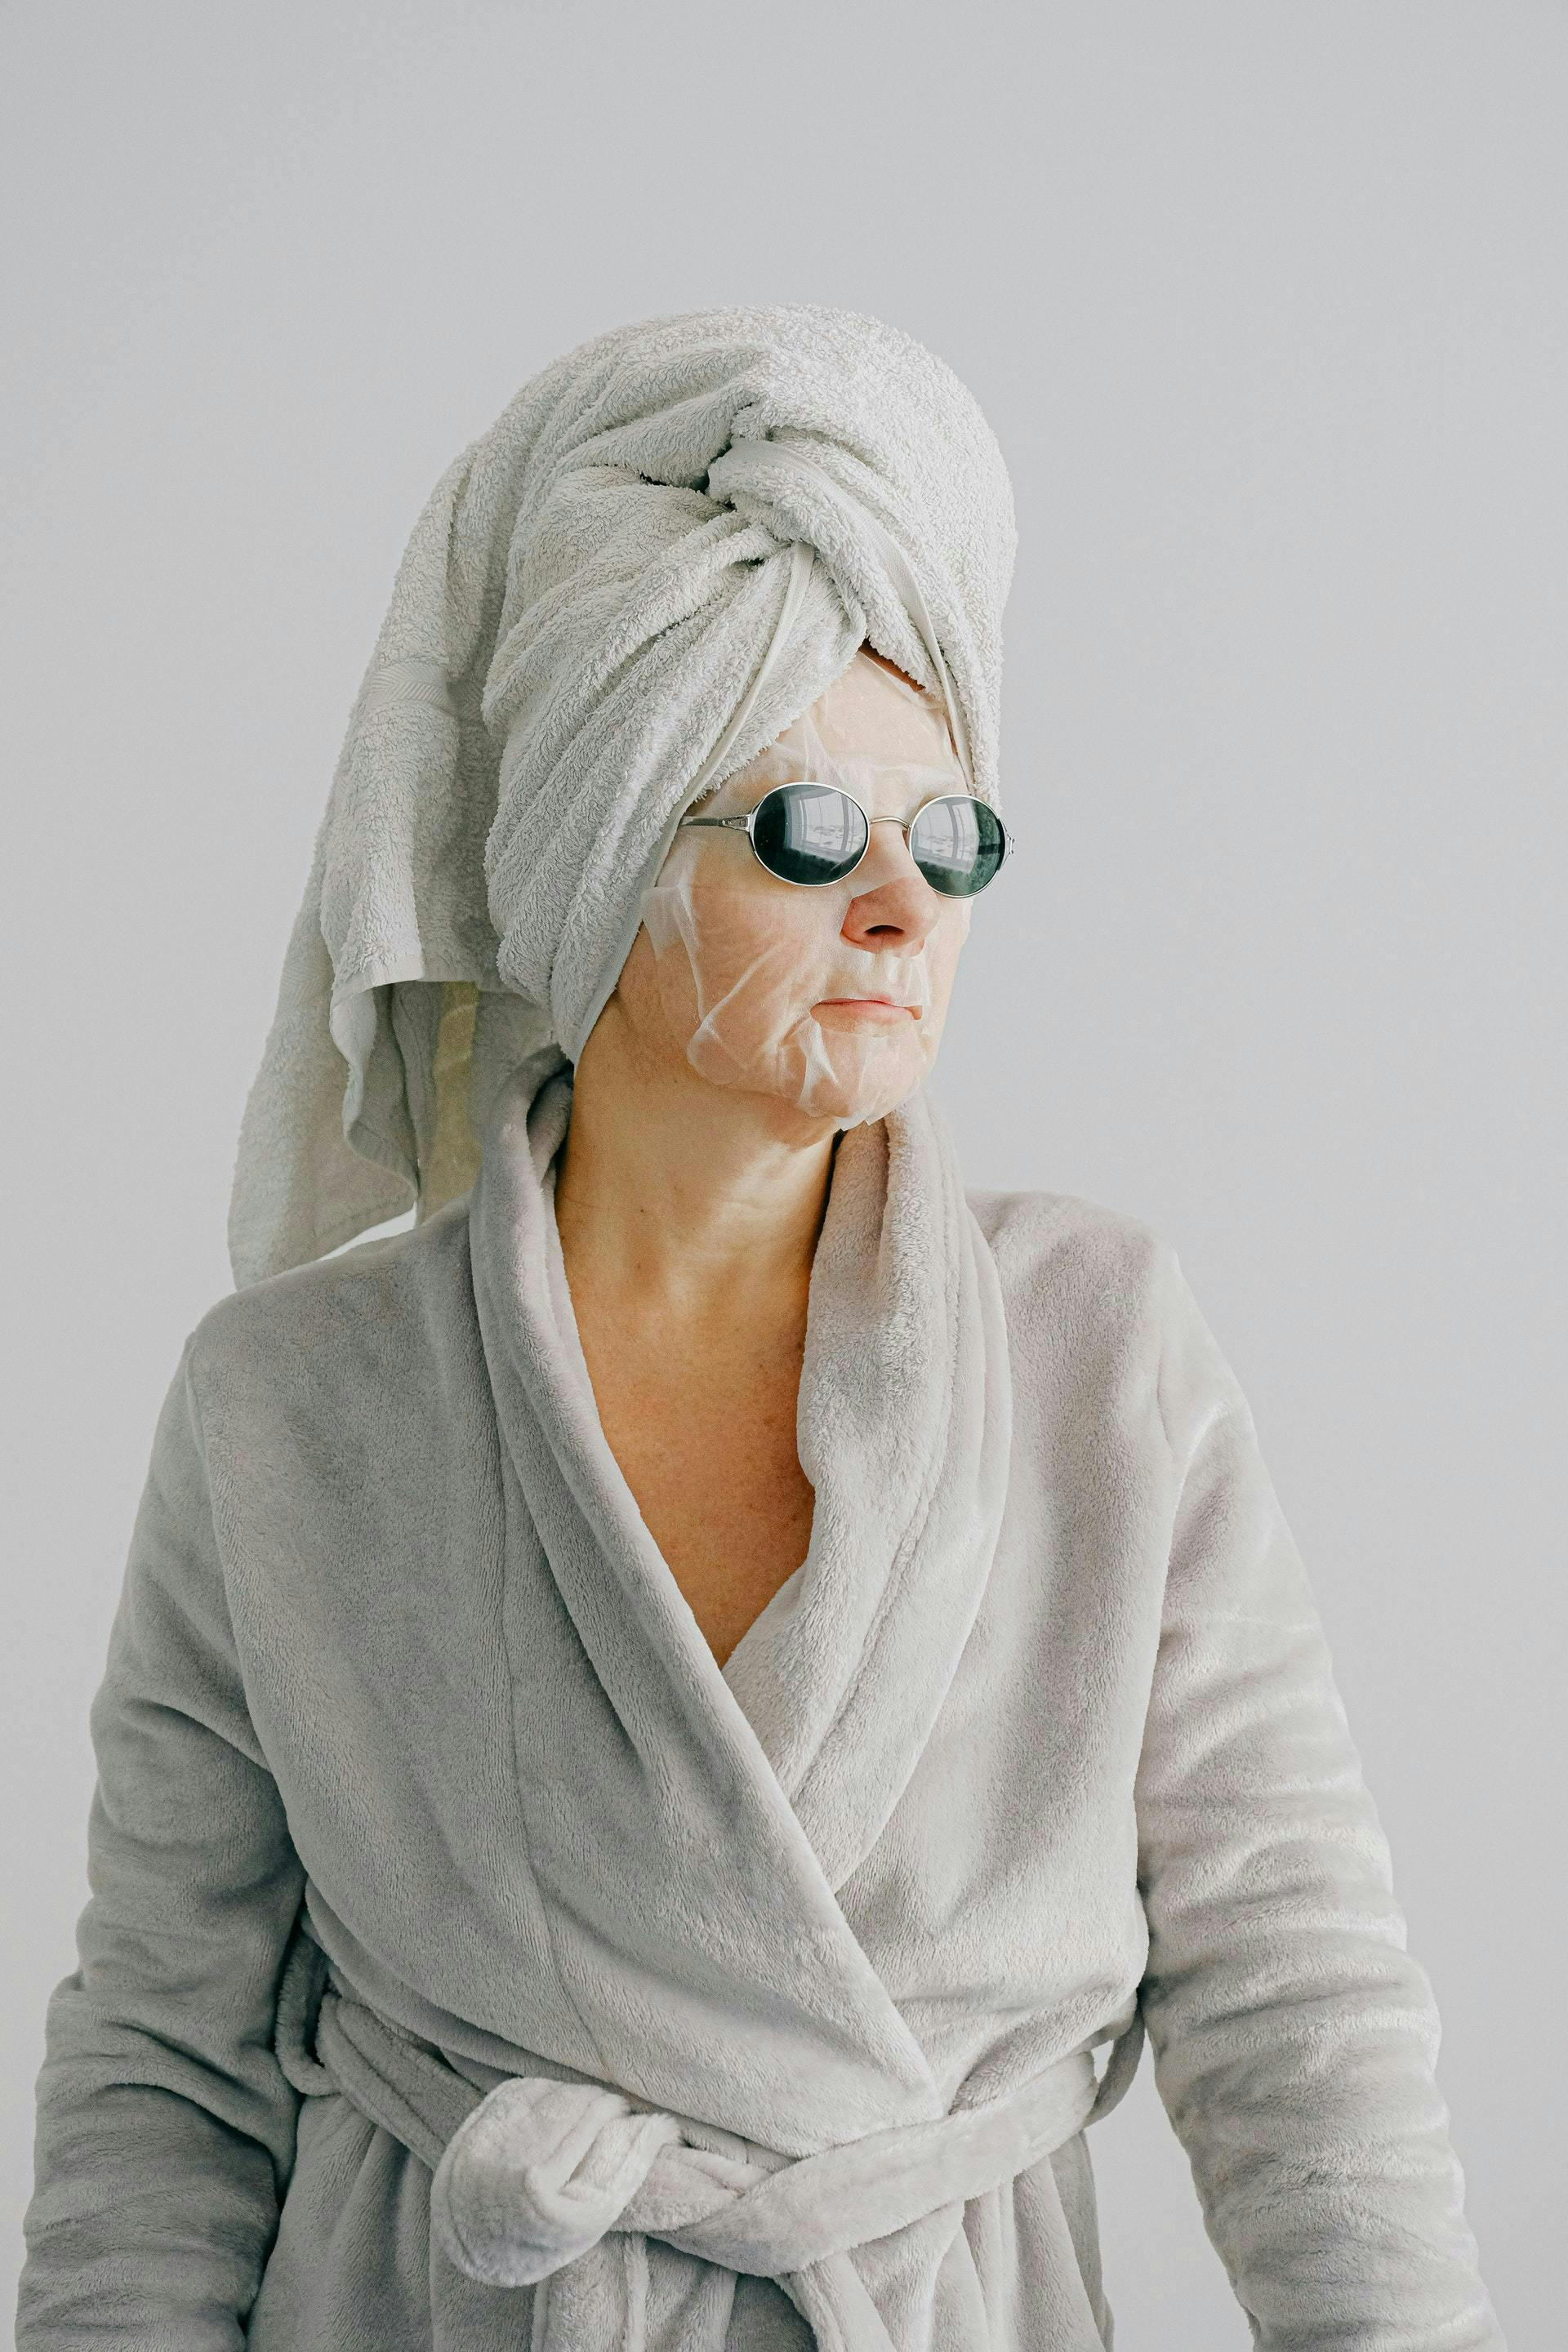 clothing sunglasses accessories home decor linen headband hat robe fashion person